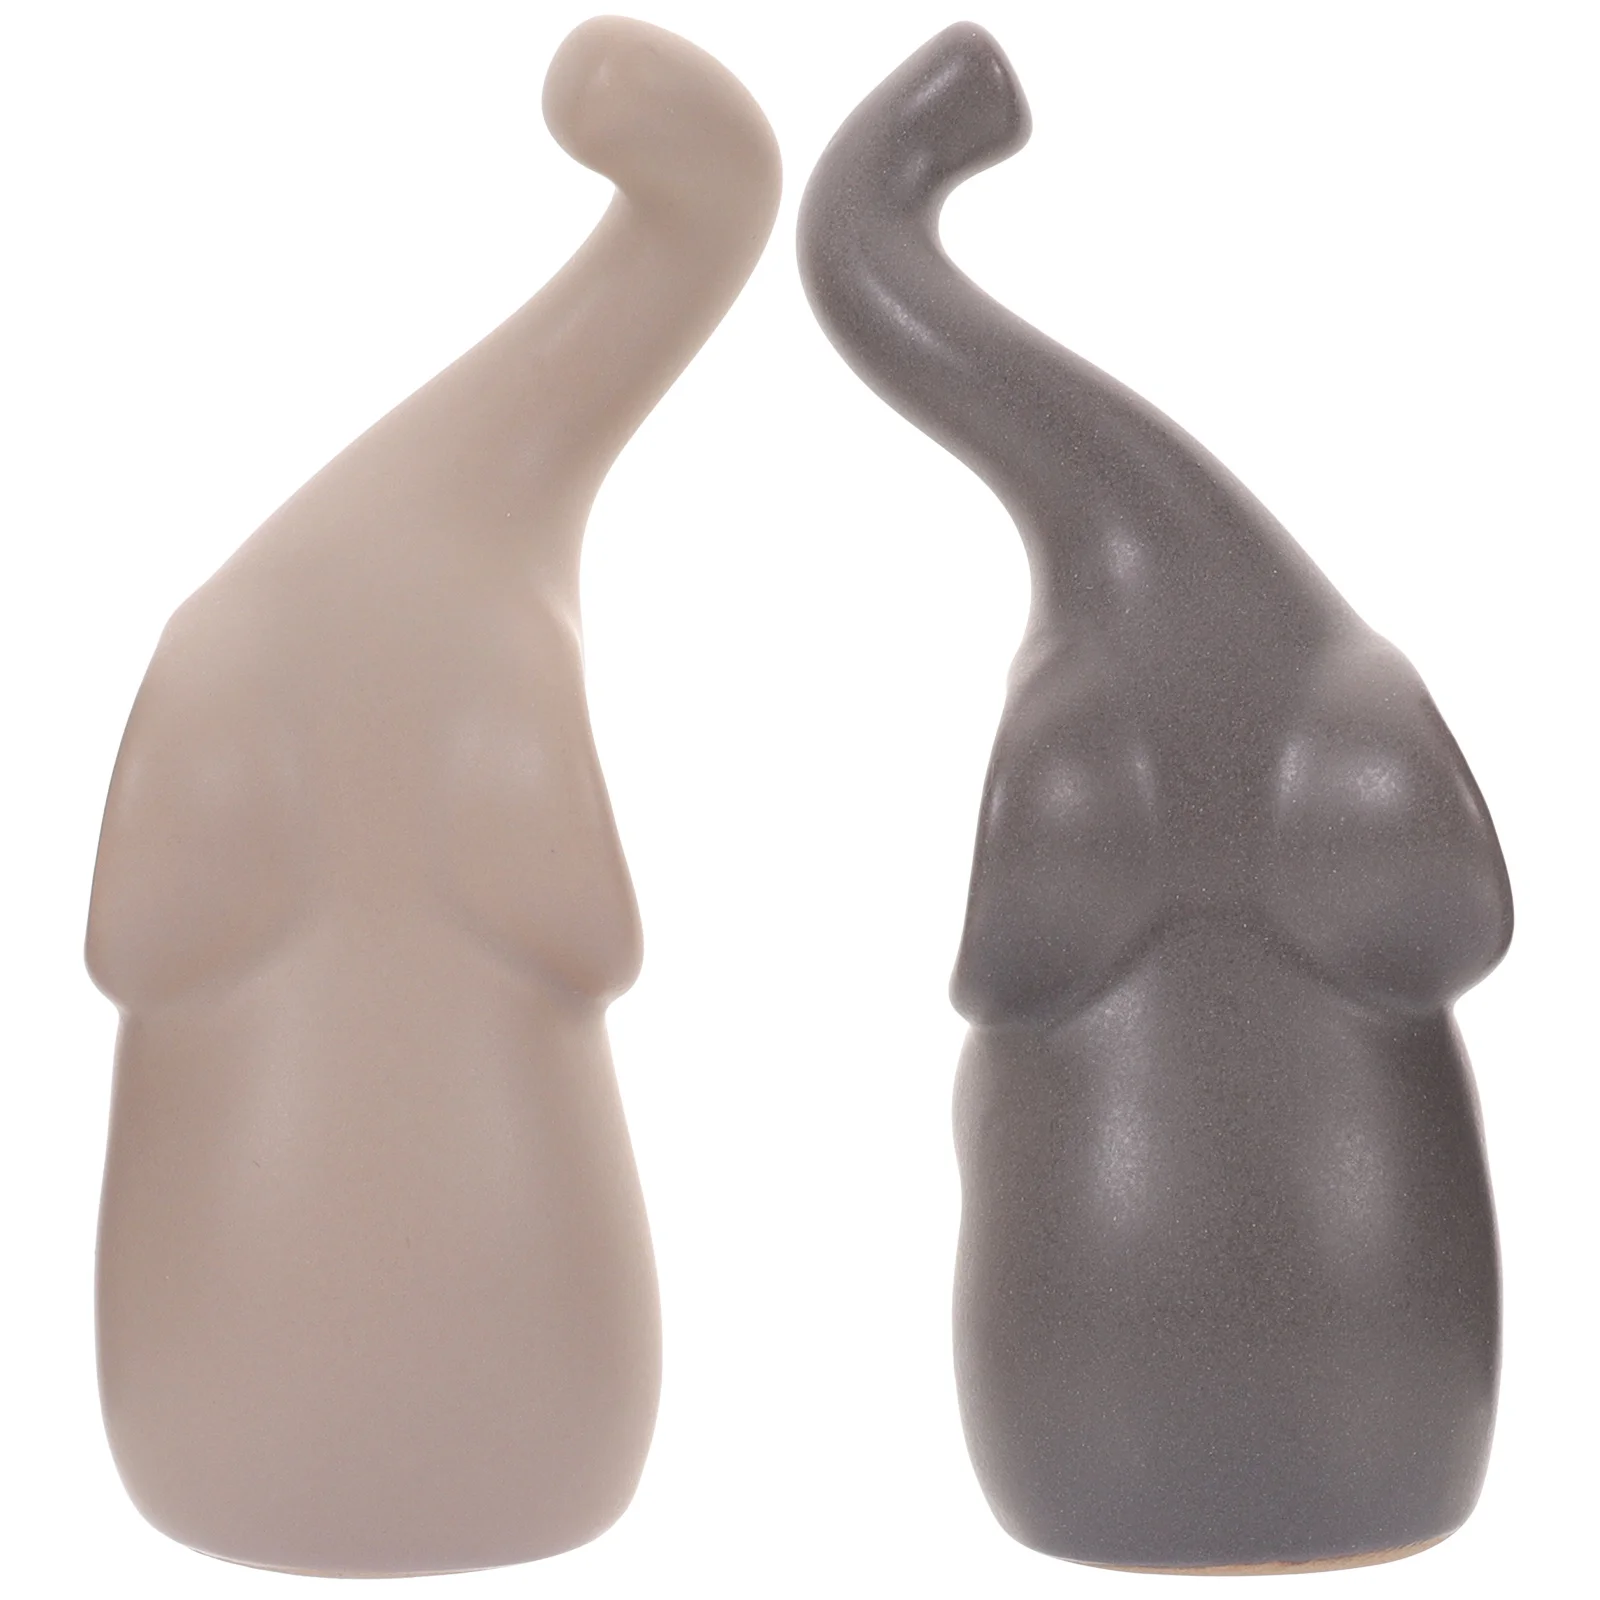 

2 Ceramic Loving Elephant Couples Figurines Miniature Elephant Statue Model Sculpture Desktop Ornaments for Decorative items